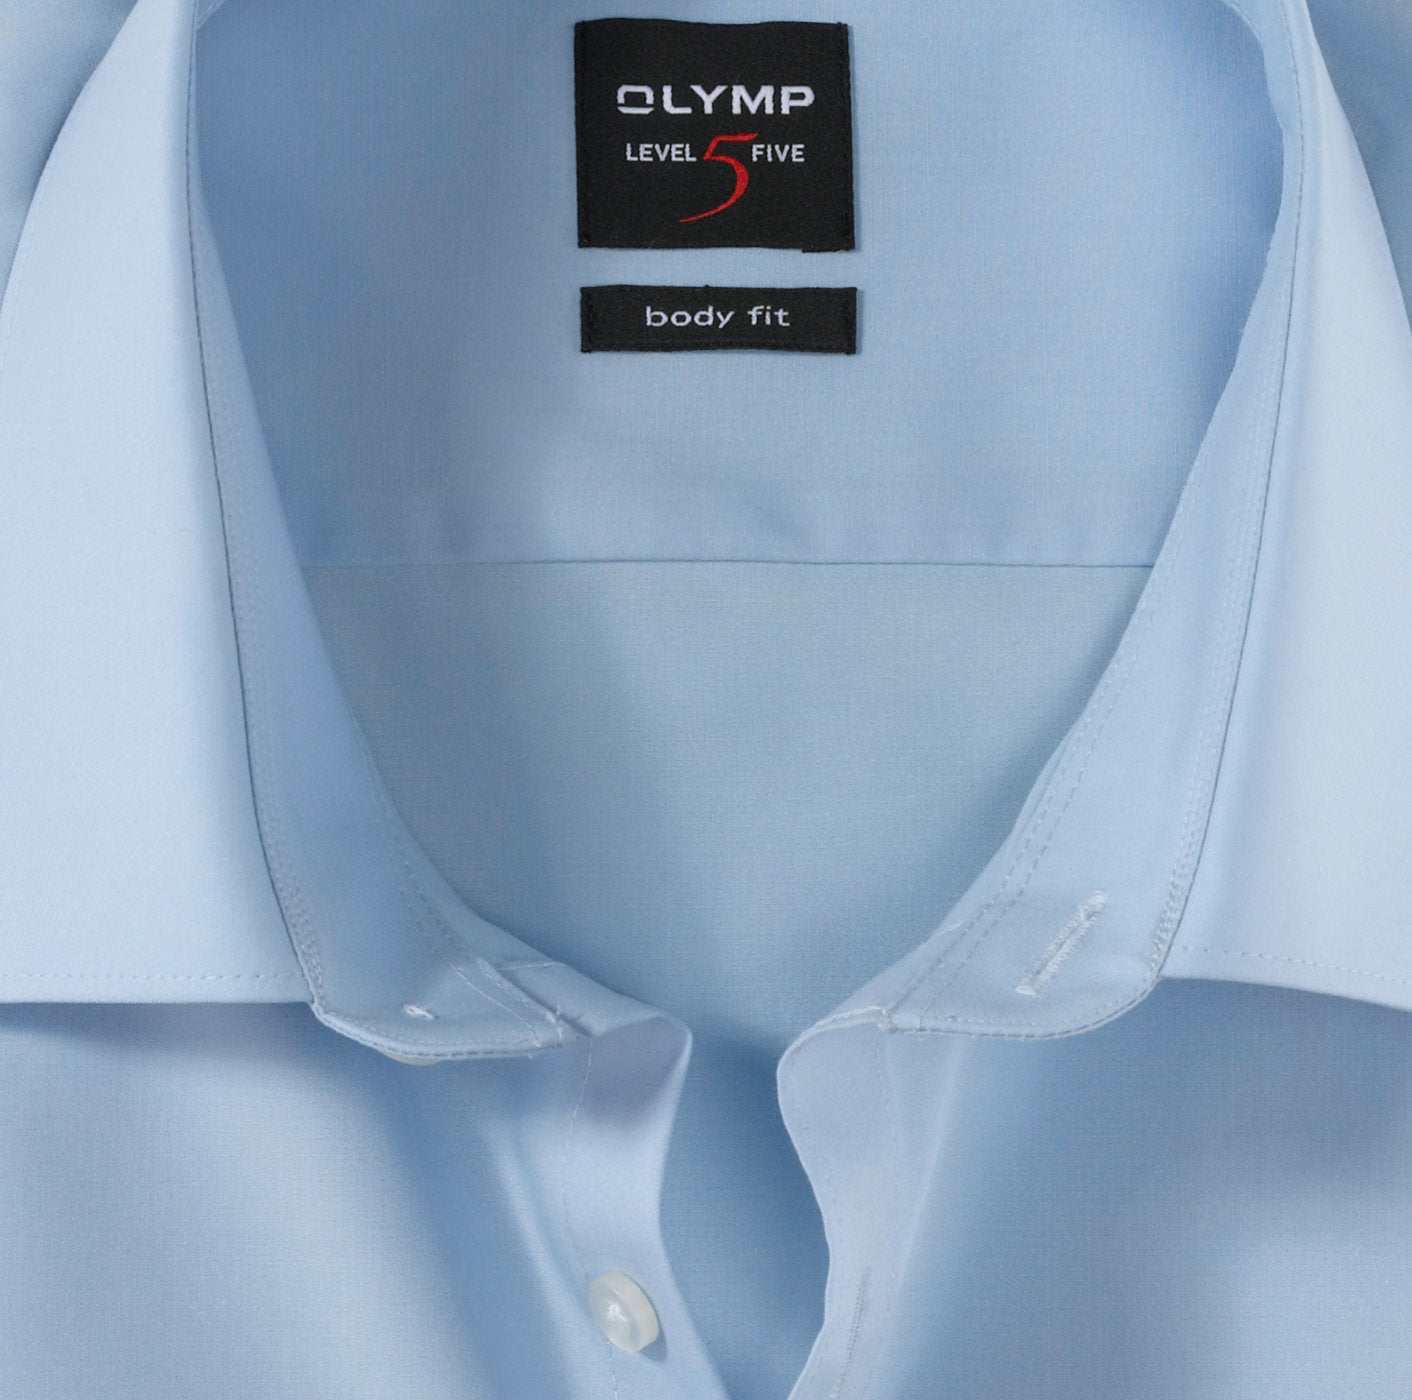 OLYMP tailliertes hellblaues Baumwollhemd